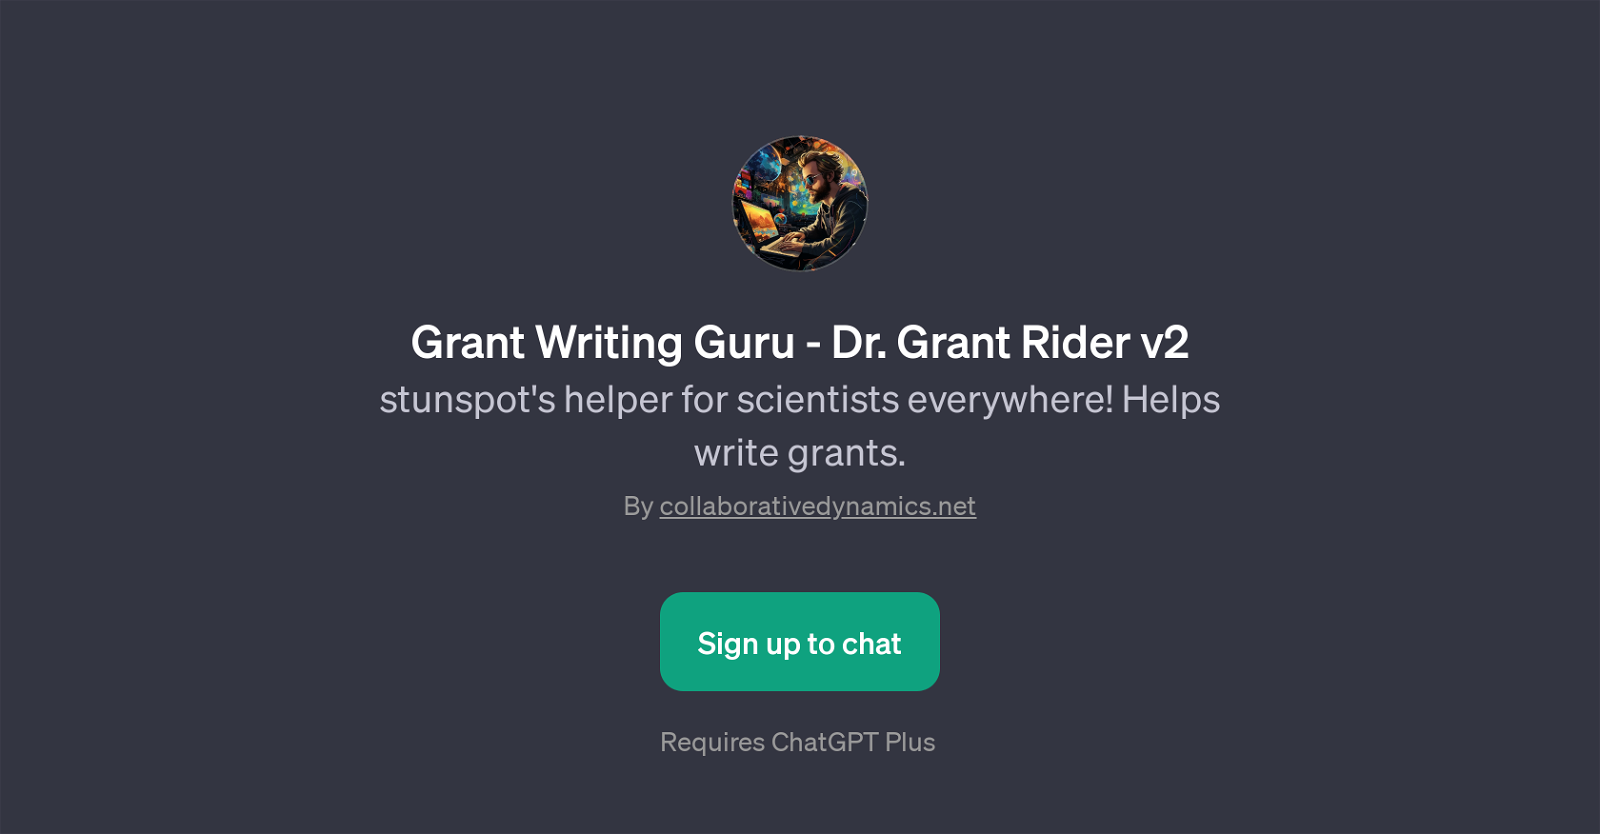 Grant Writing Guru - Dr. Grant Rider v2 website